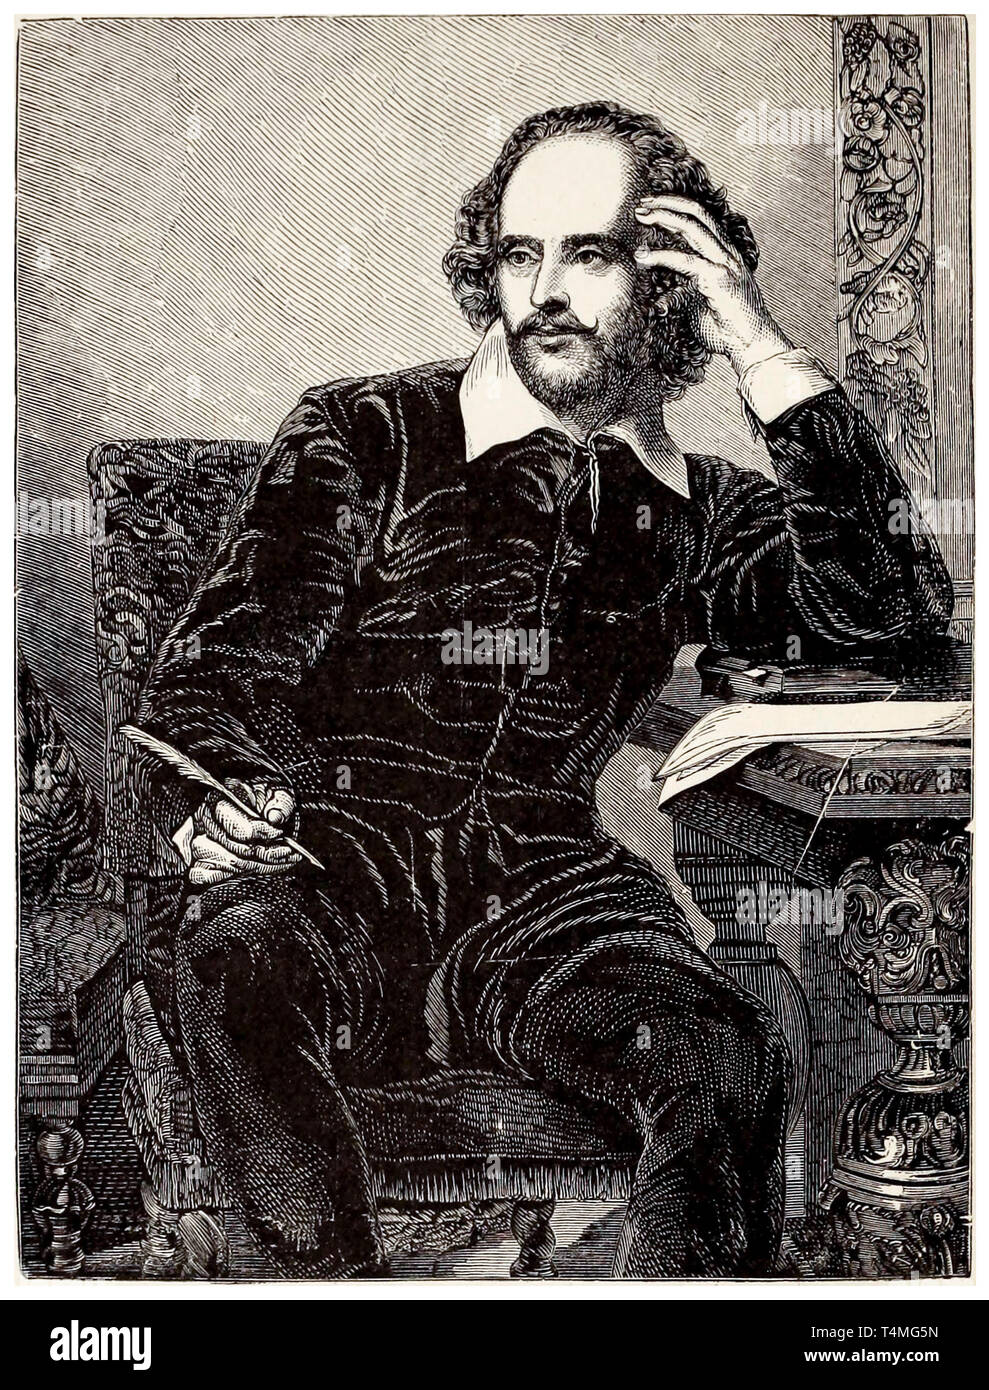 William Shakespeare (1564-1616), portrait etching, 1898 Stock Photo